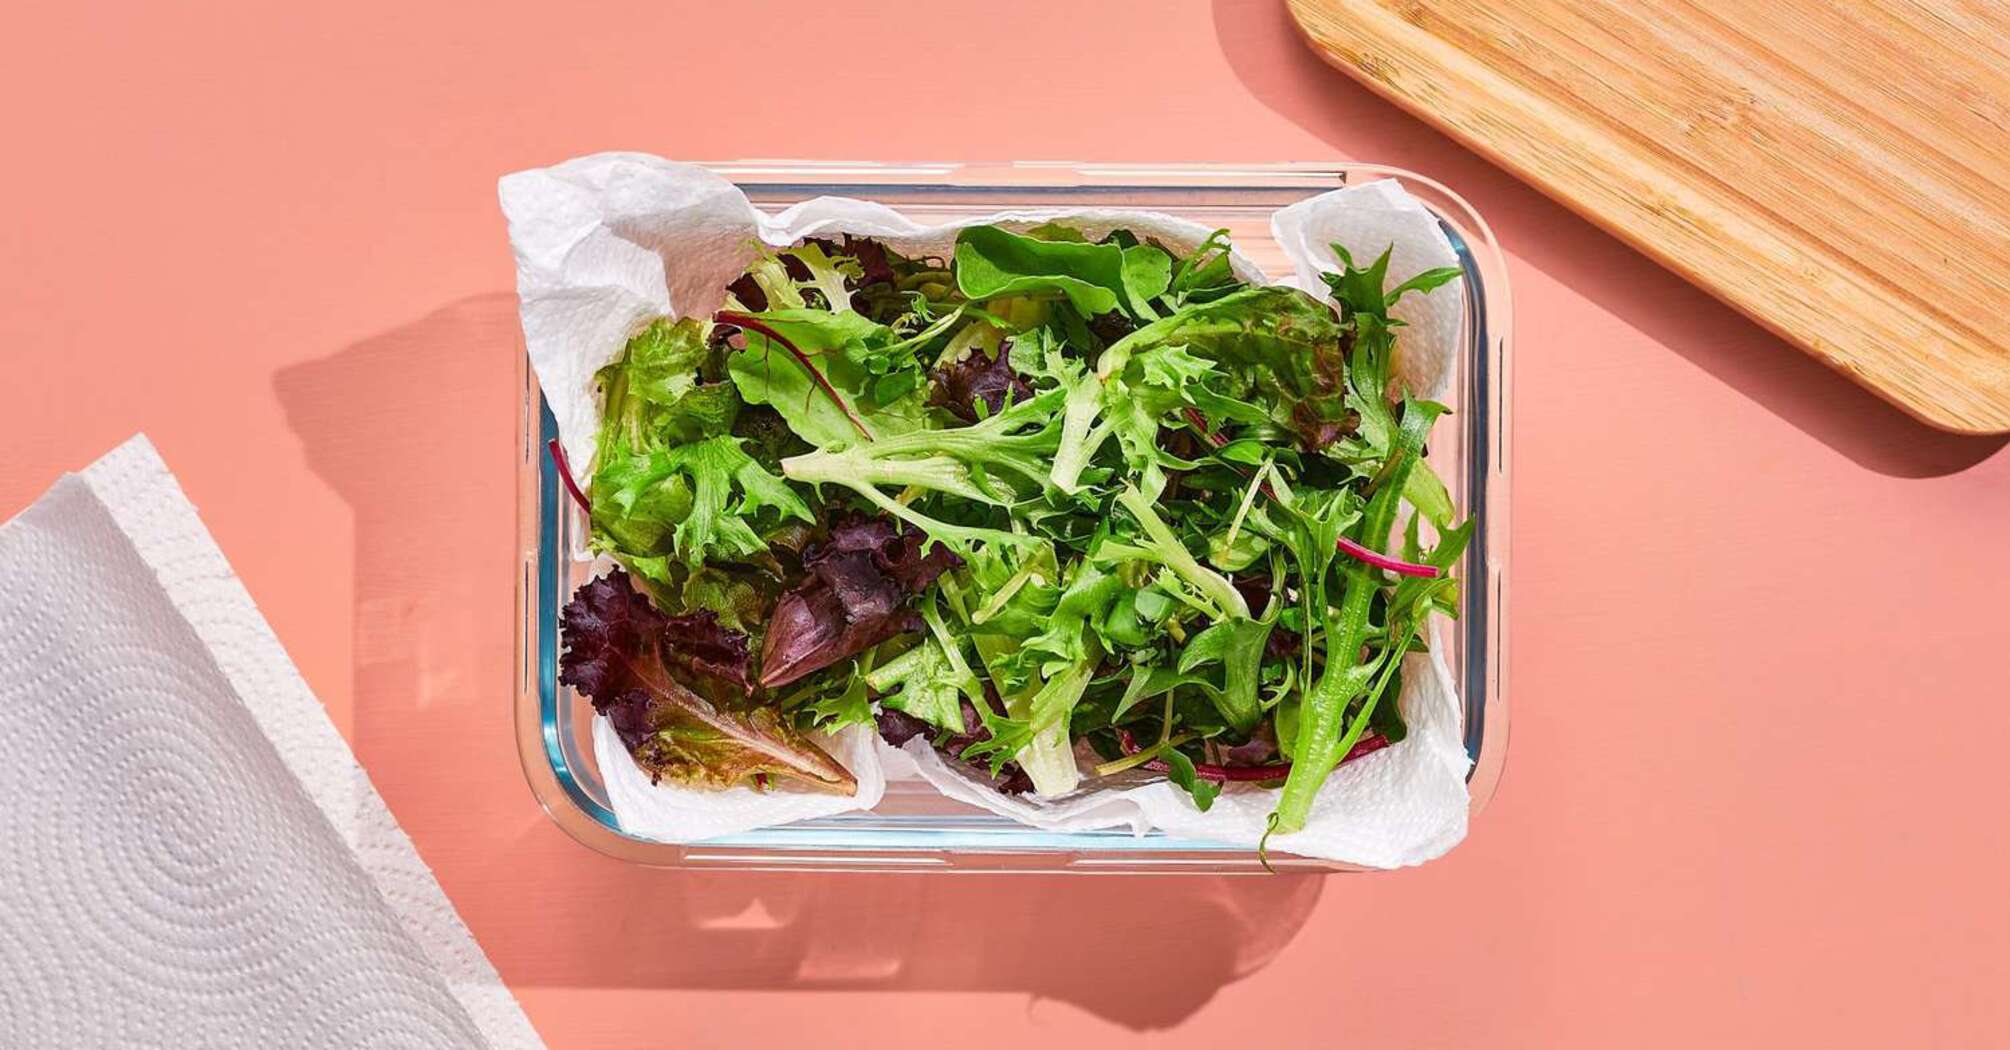 How to keep salad fresh